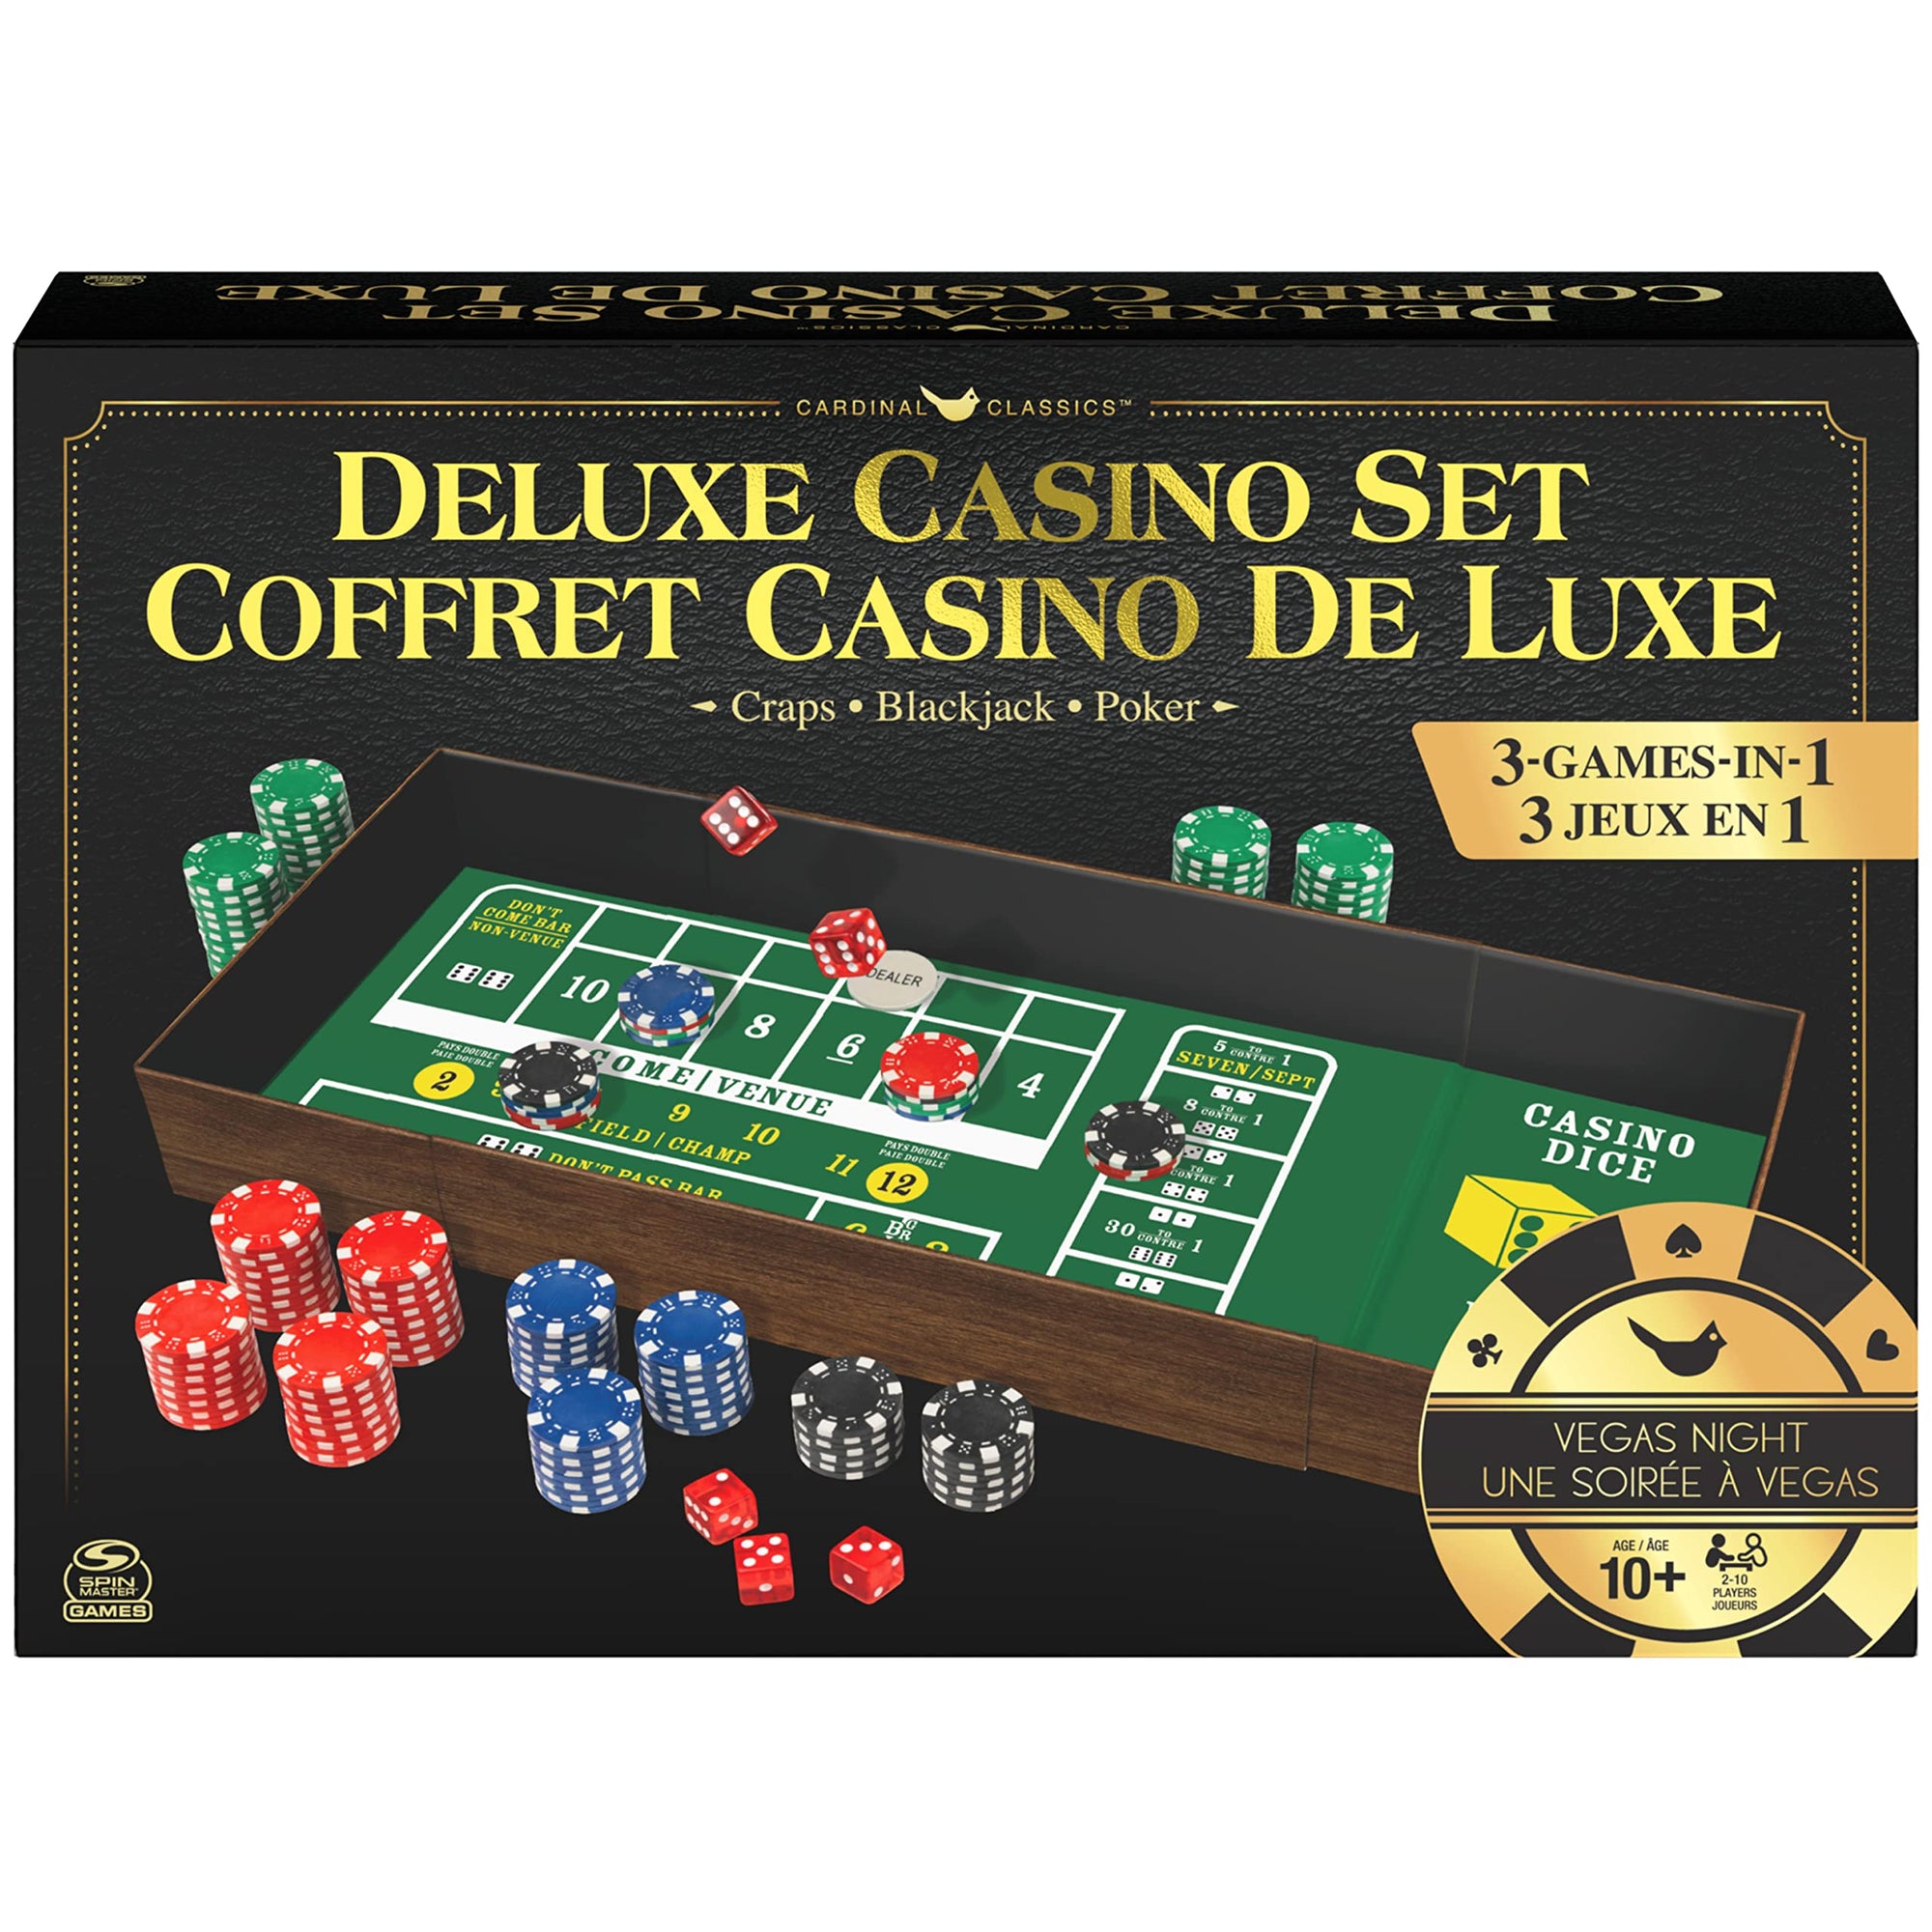 Cardinal Classics Deluxe Casino Set